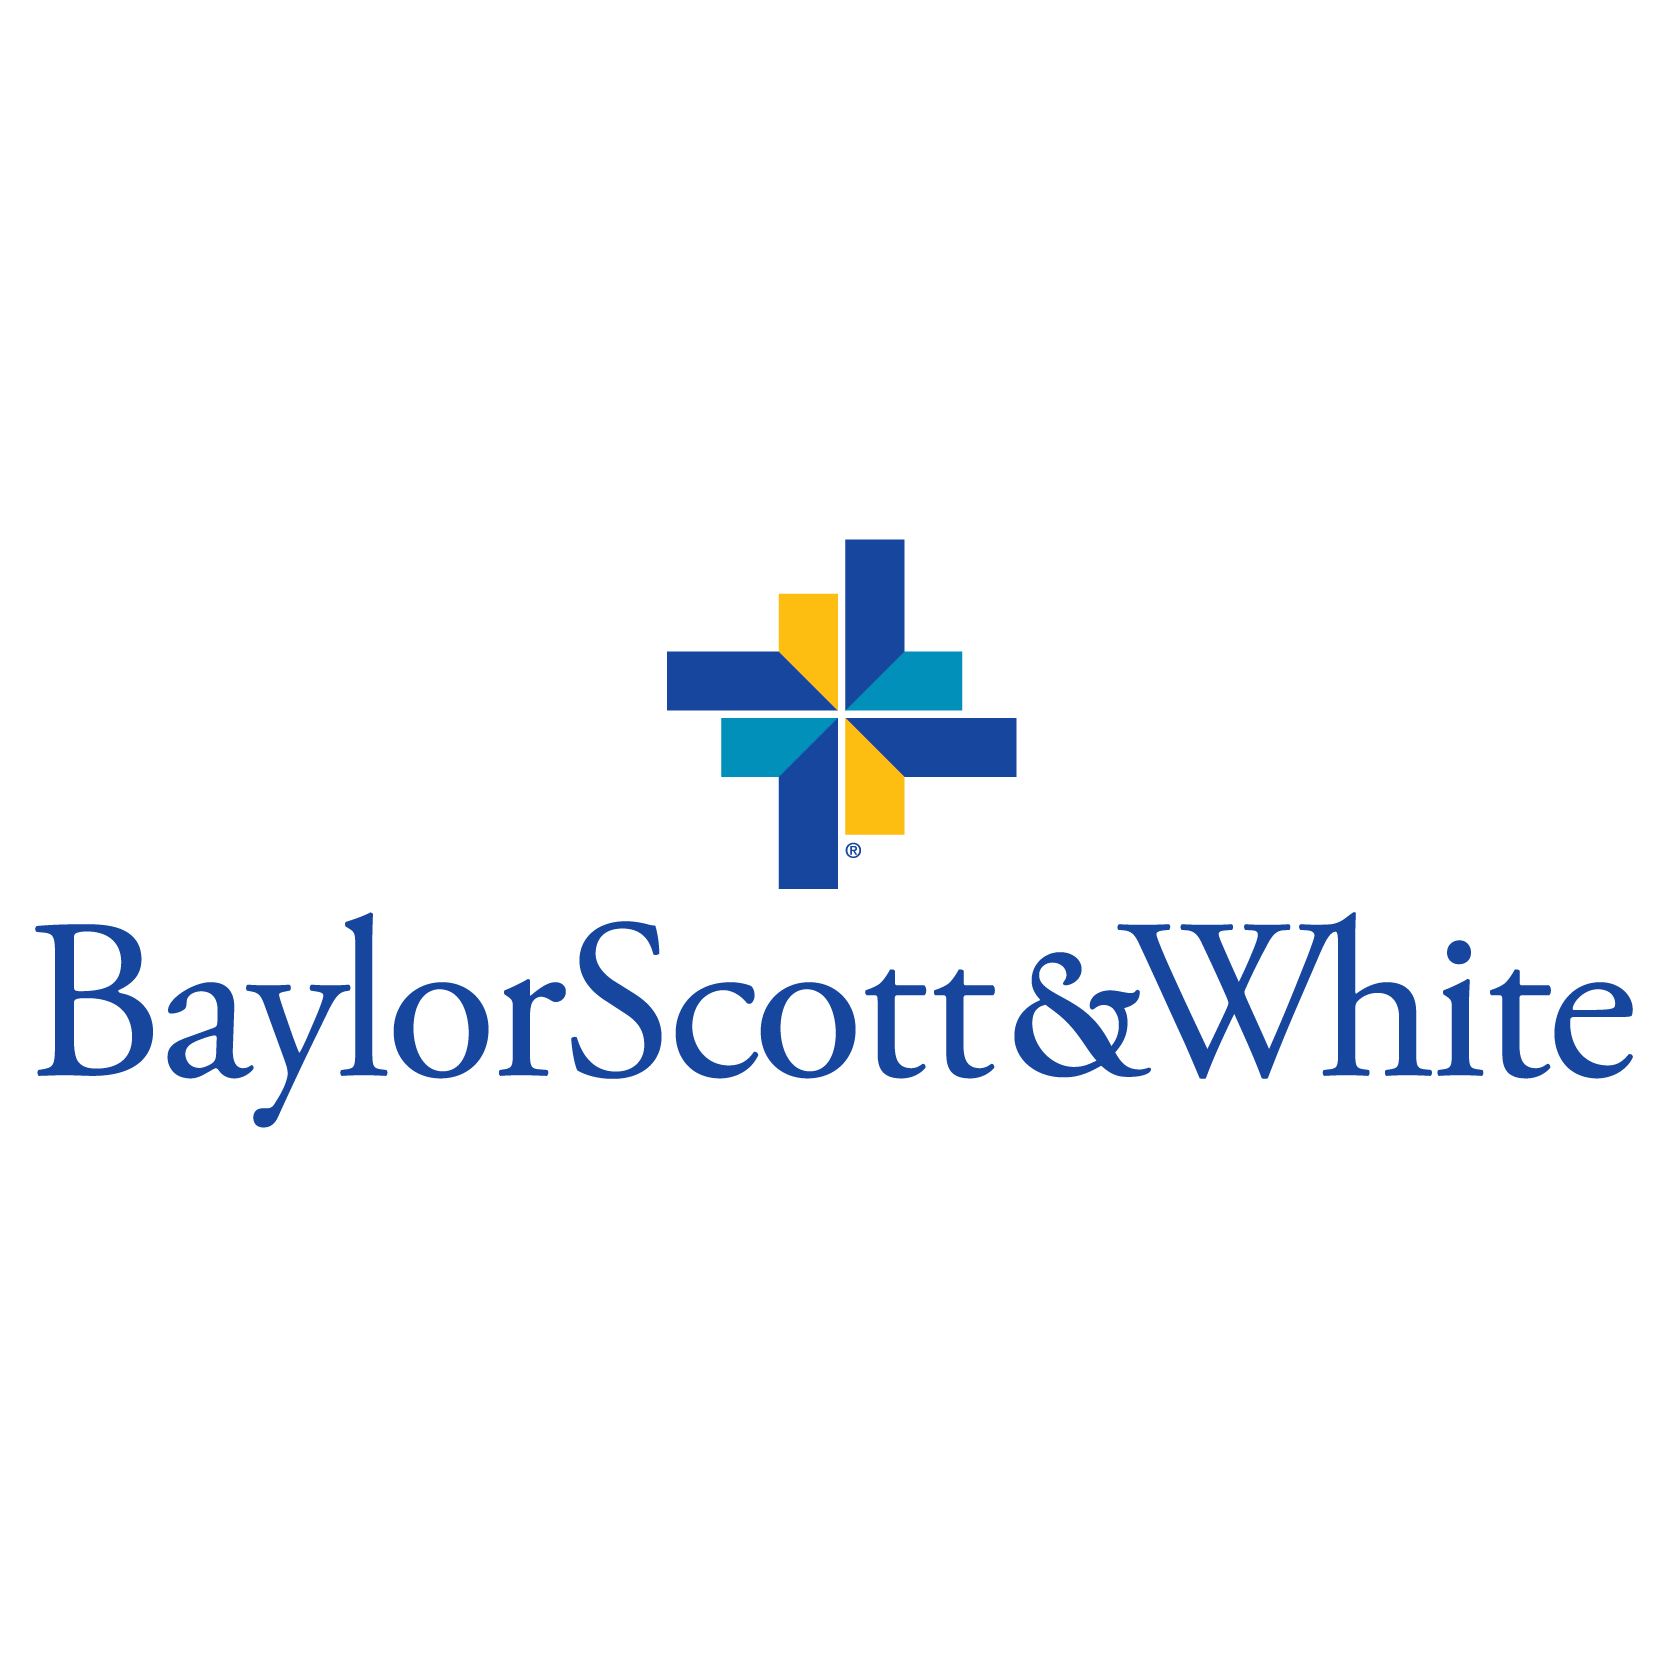 Baylor Scott & White